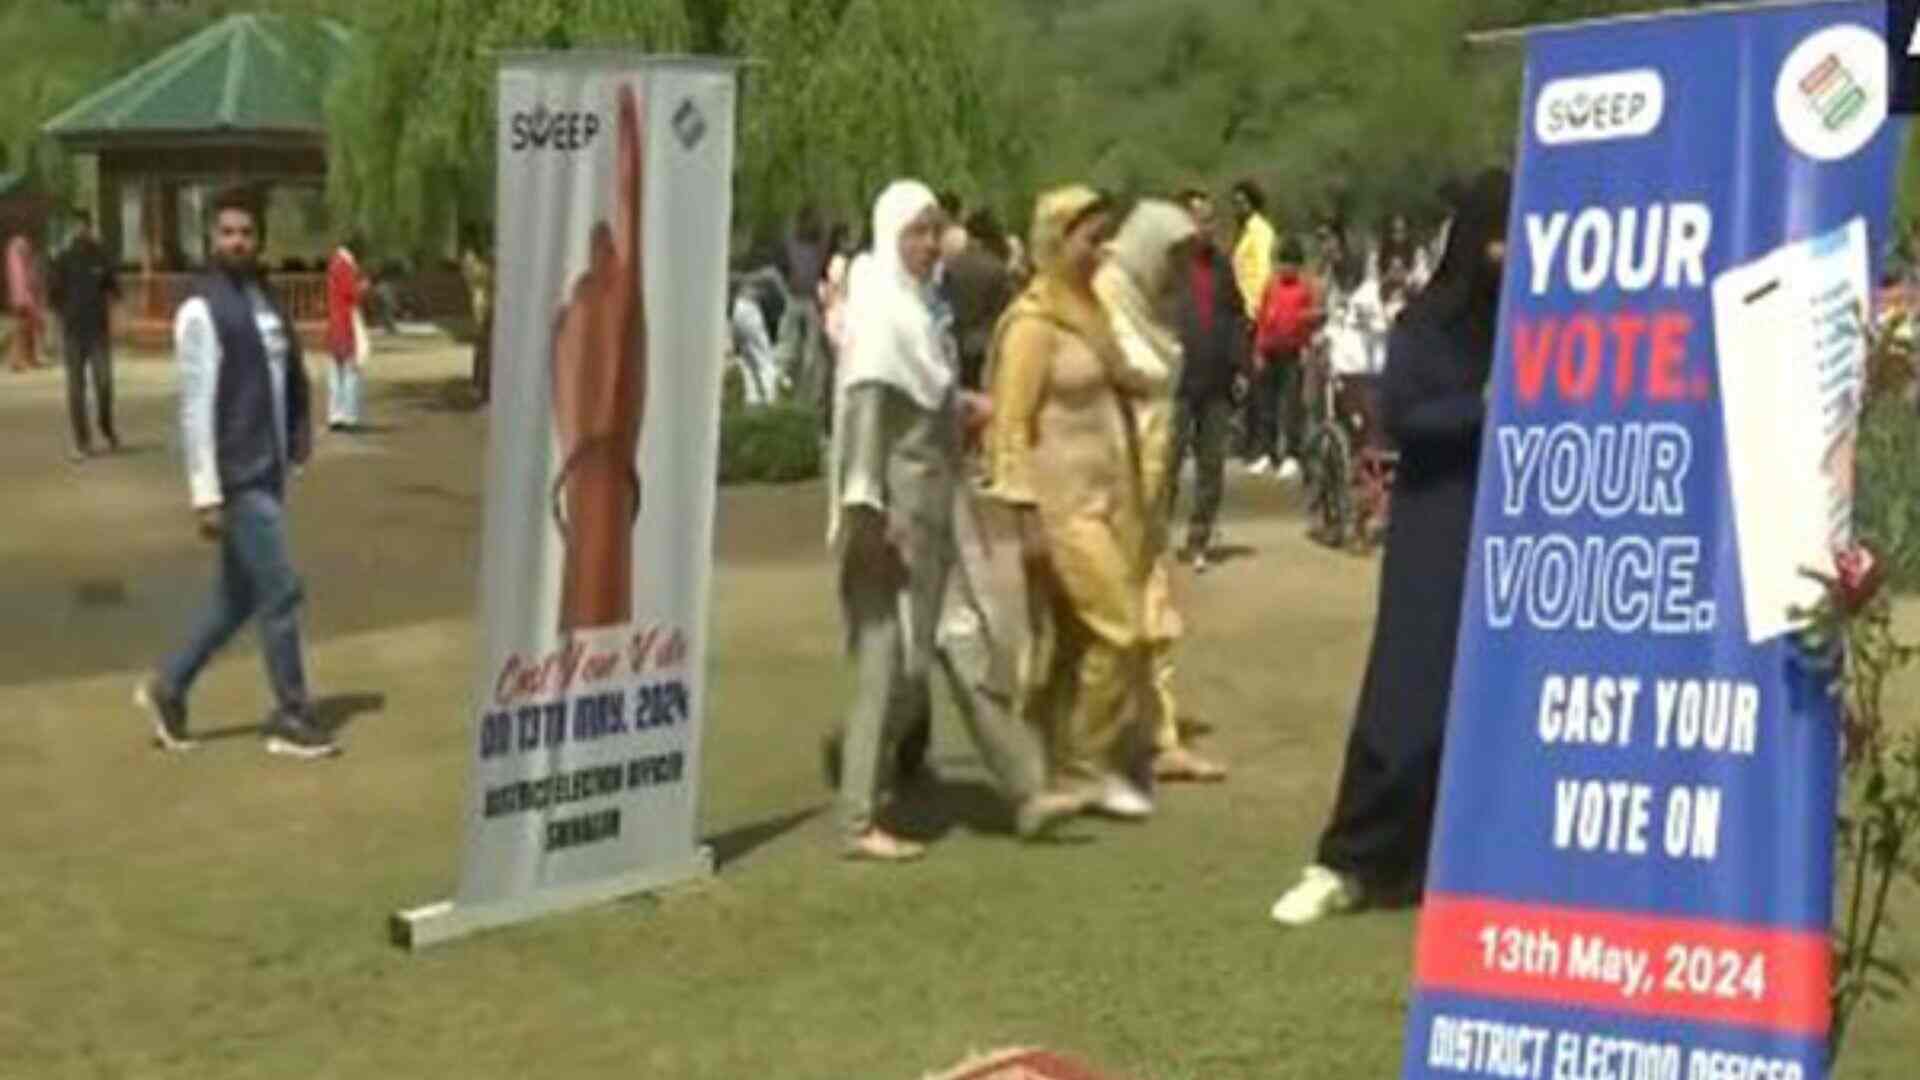 ECI organizes mega voter awareness program in Srinagar under SVEEP